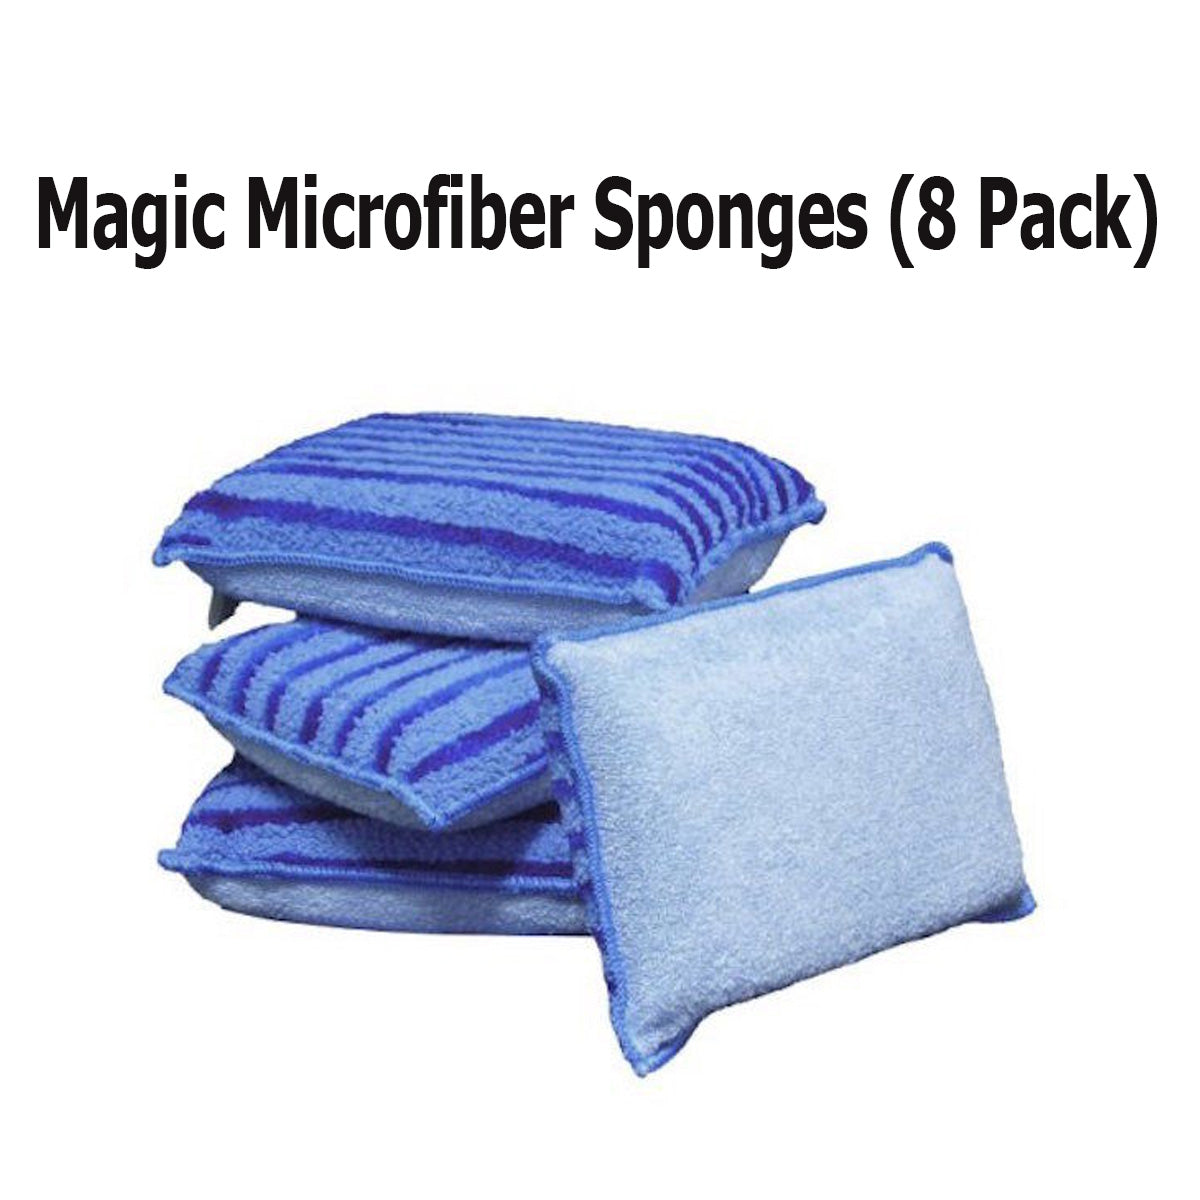 Magic Microfiber Quick Cleaning Scrubbing Sponges (8 Pack)